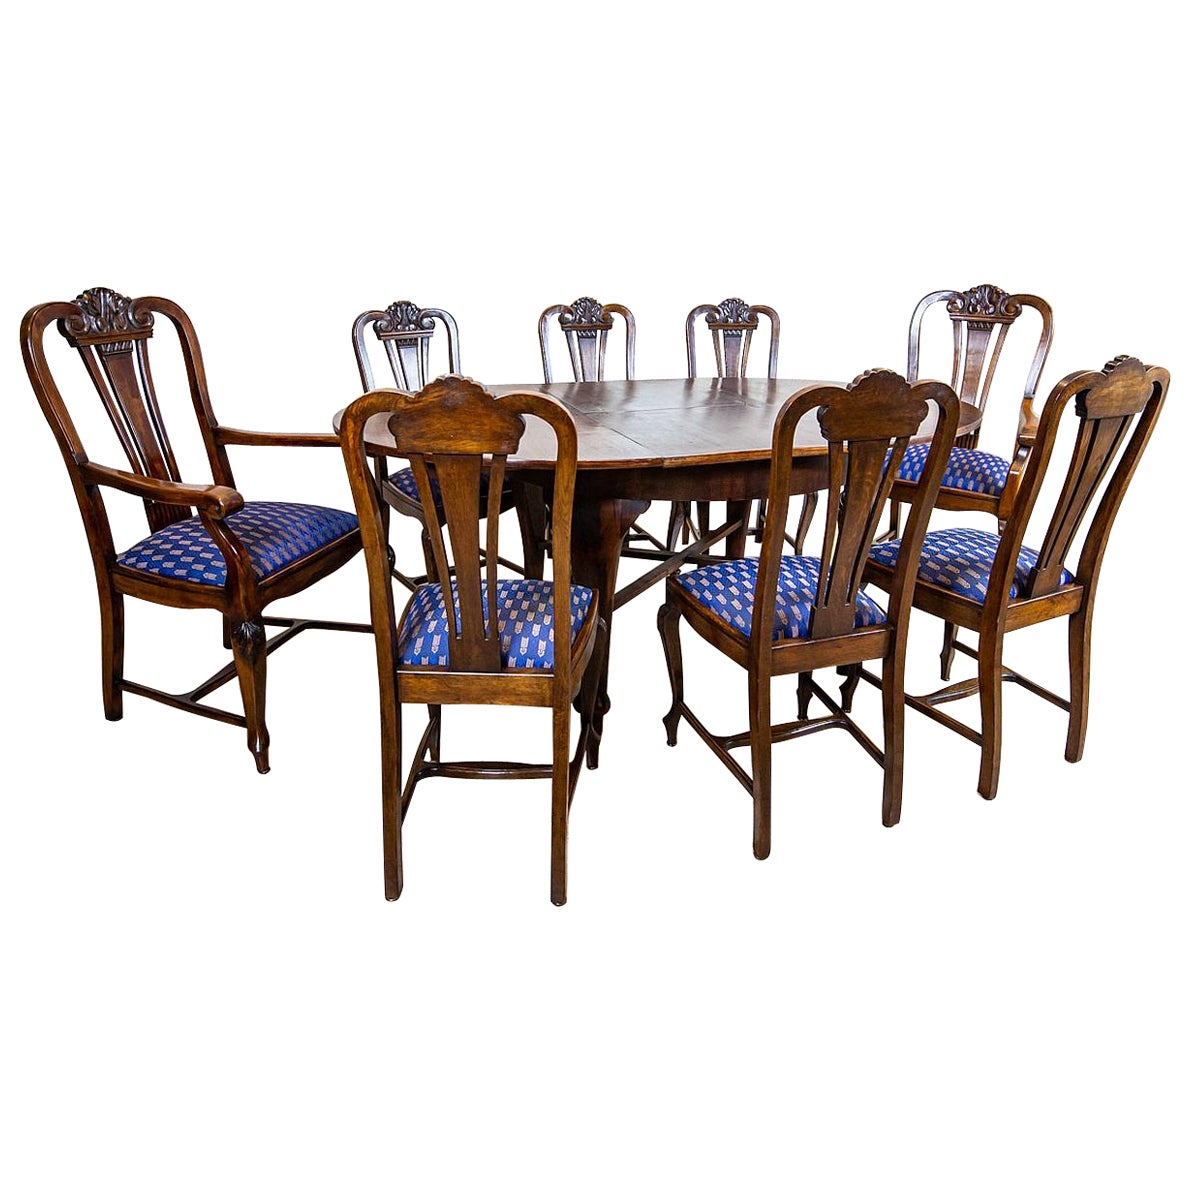 Oak & Walnut Dining Room Set From the Interwar Period in Blue Upholstery